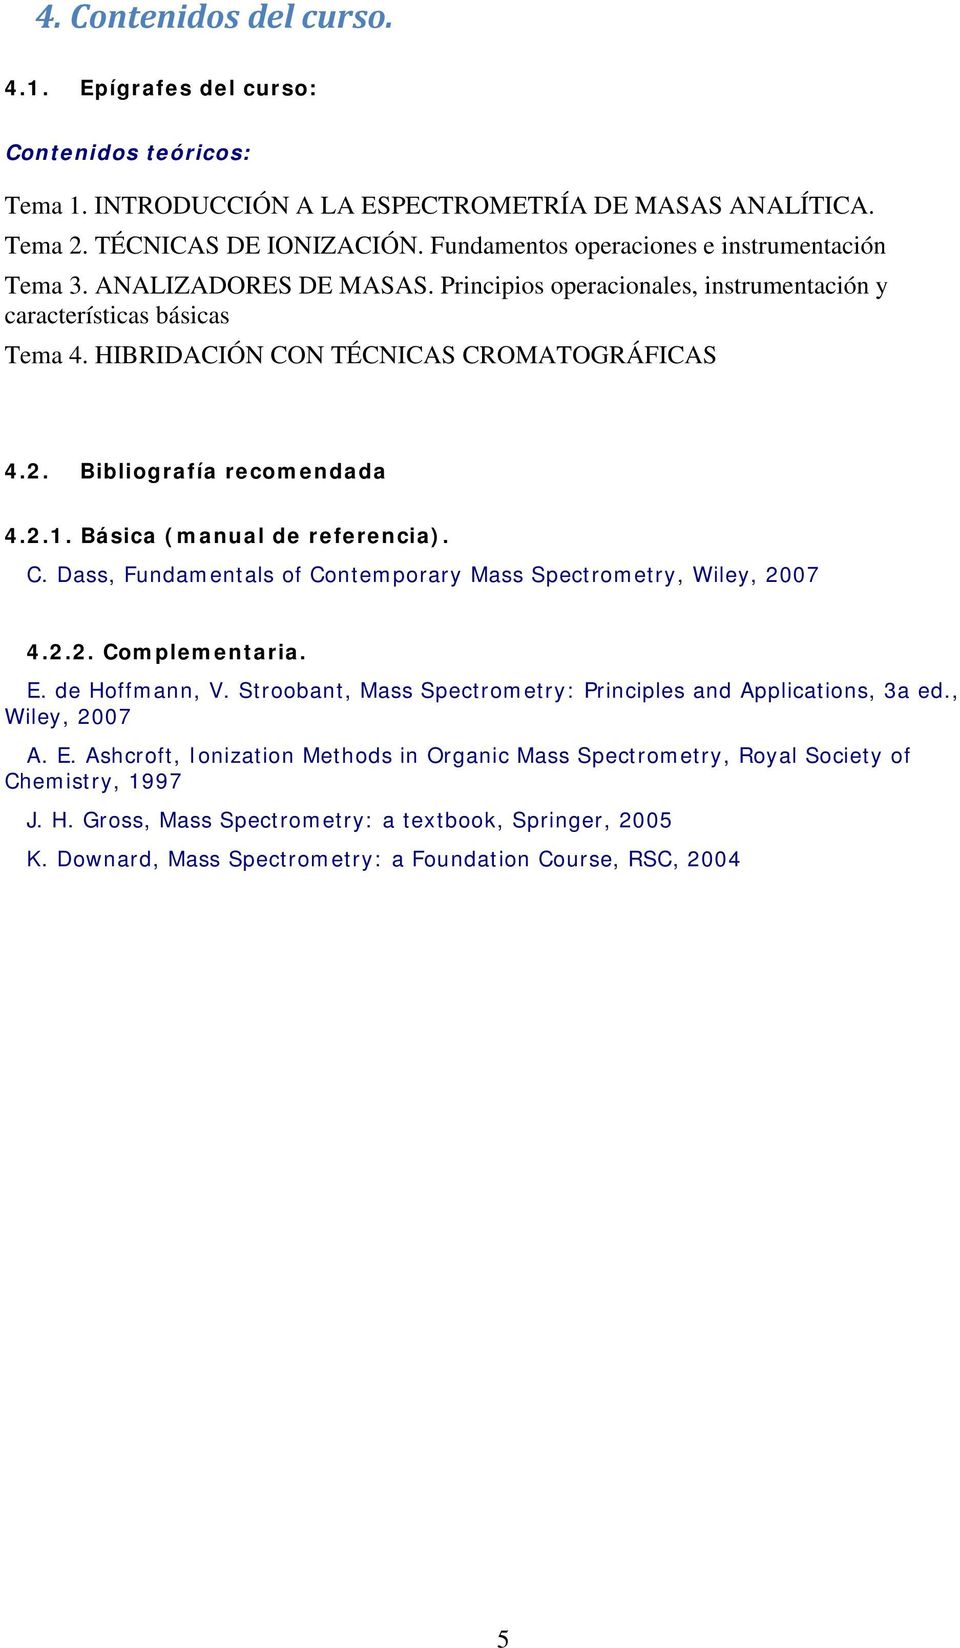 Bibliografía recomendada 4.2.1. Básica (manual de referencia). C. Dass, Fundamentals of Contemporary Mass Spectrometry, Wiley, 2007 4.2.2. Complementaria. E. de Hoffmann, V.